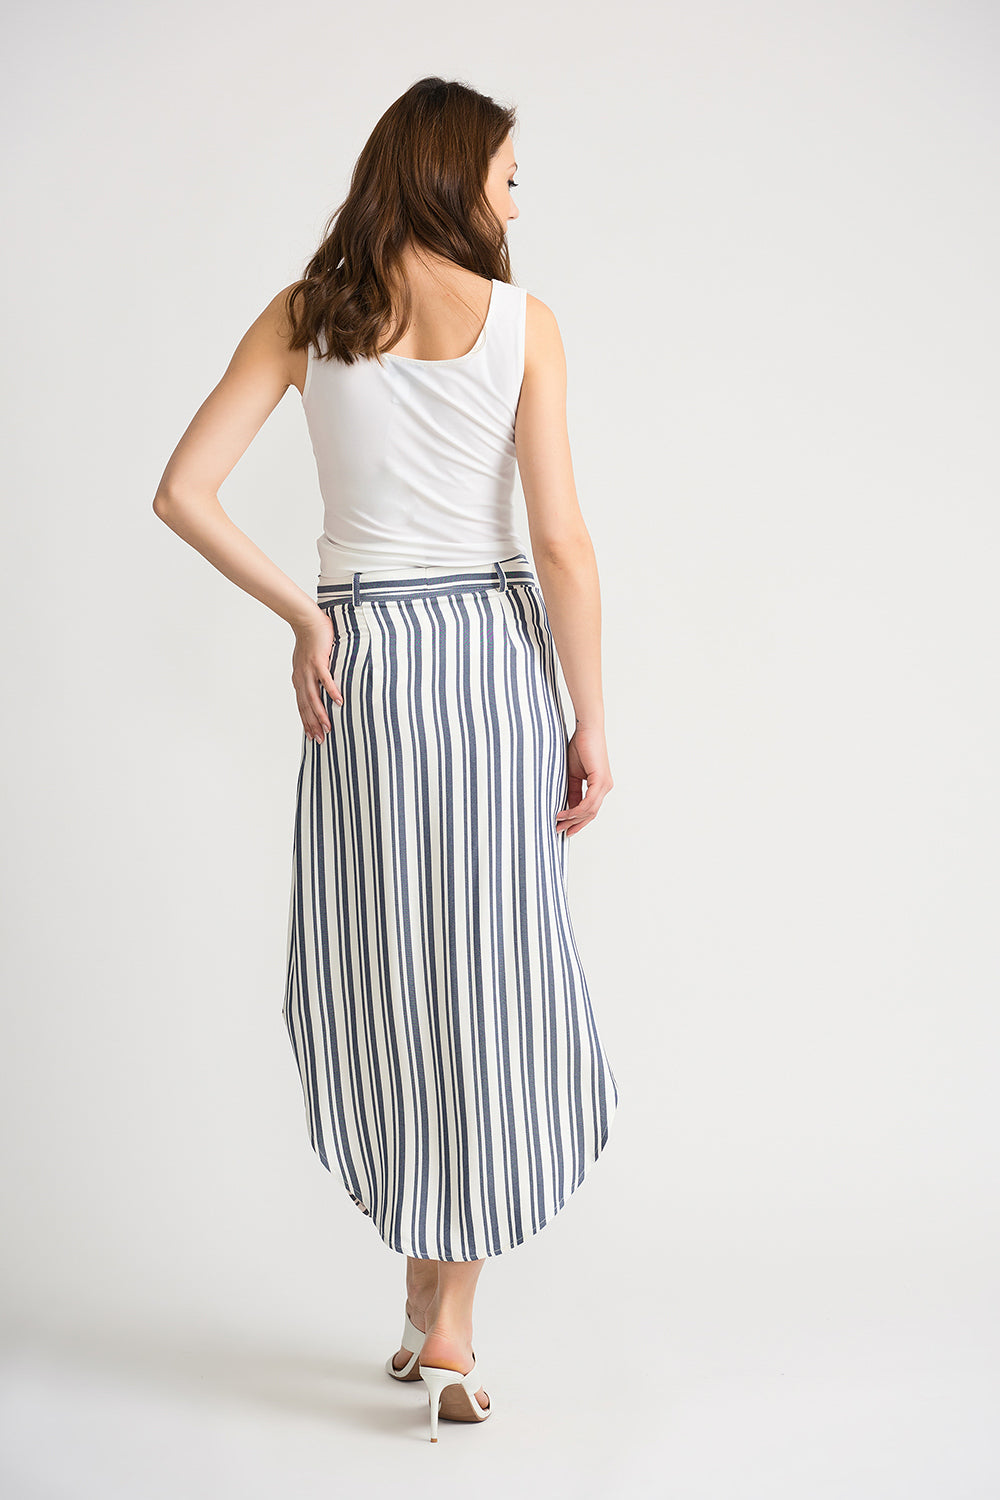 Joseph Ribkoff Off-White Blue Skirt Style 202396